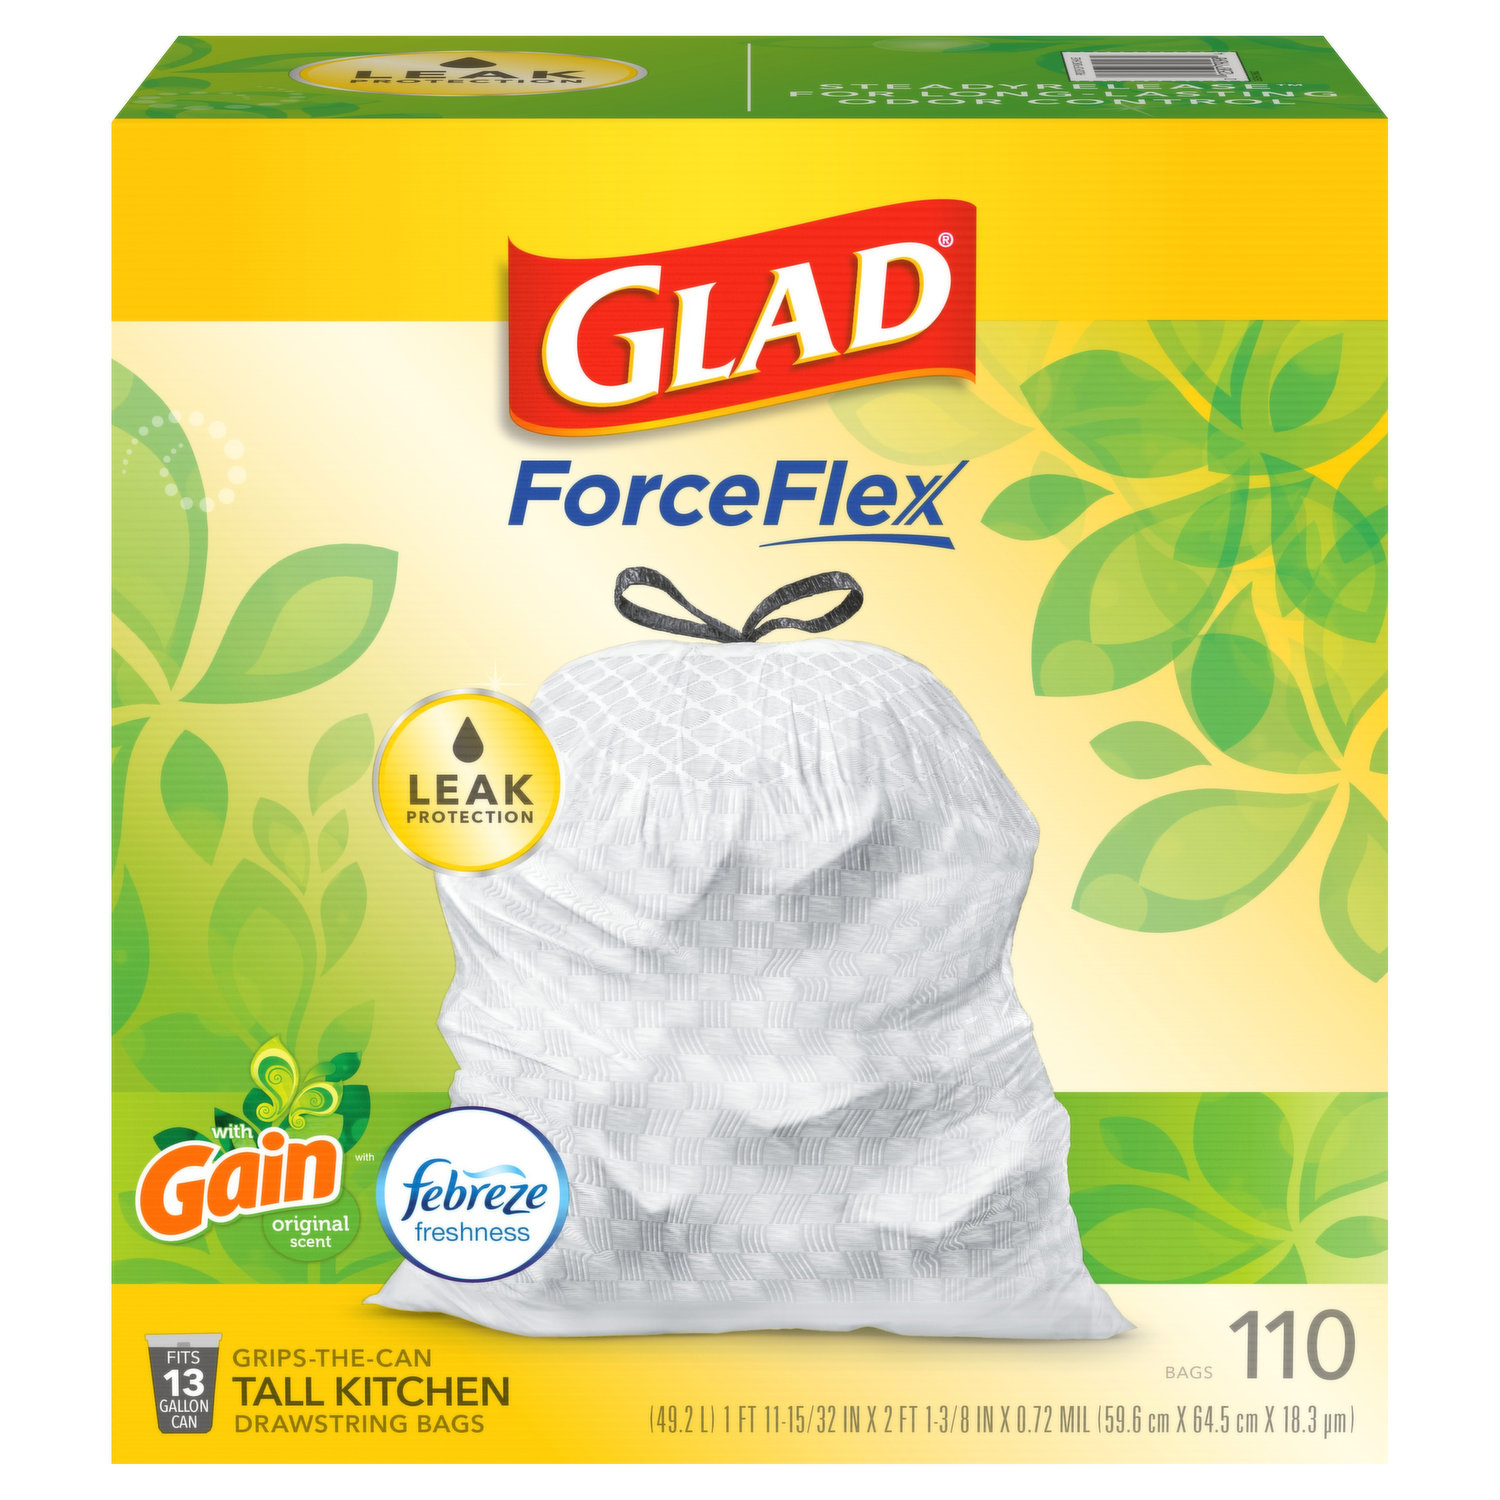 Glad ForceFlex with Febreze Gain Original Scent Tall Kitchen Drawstring  Trash Bags, 40 ct - Foods Co.